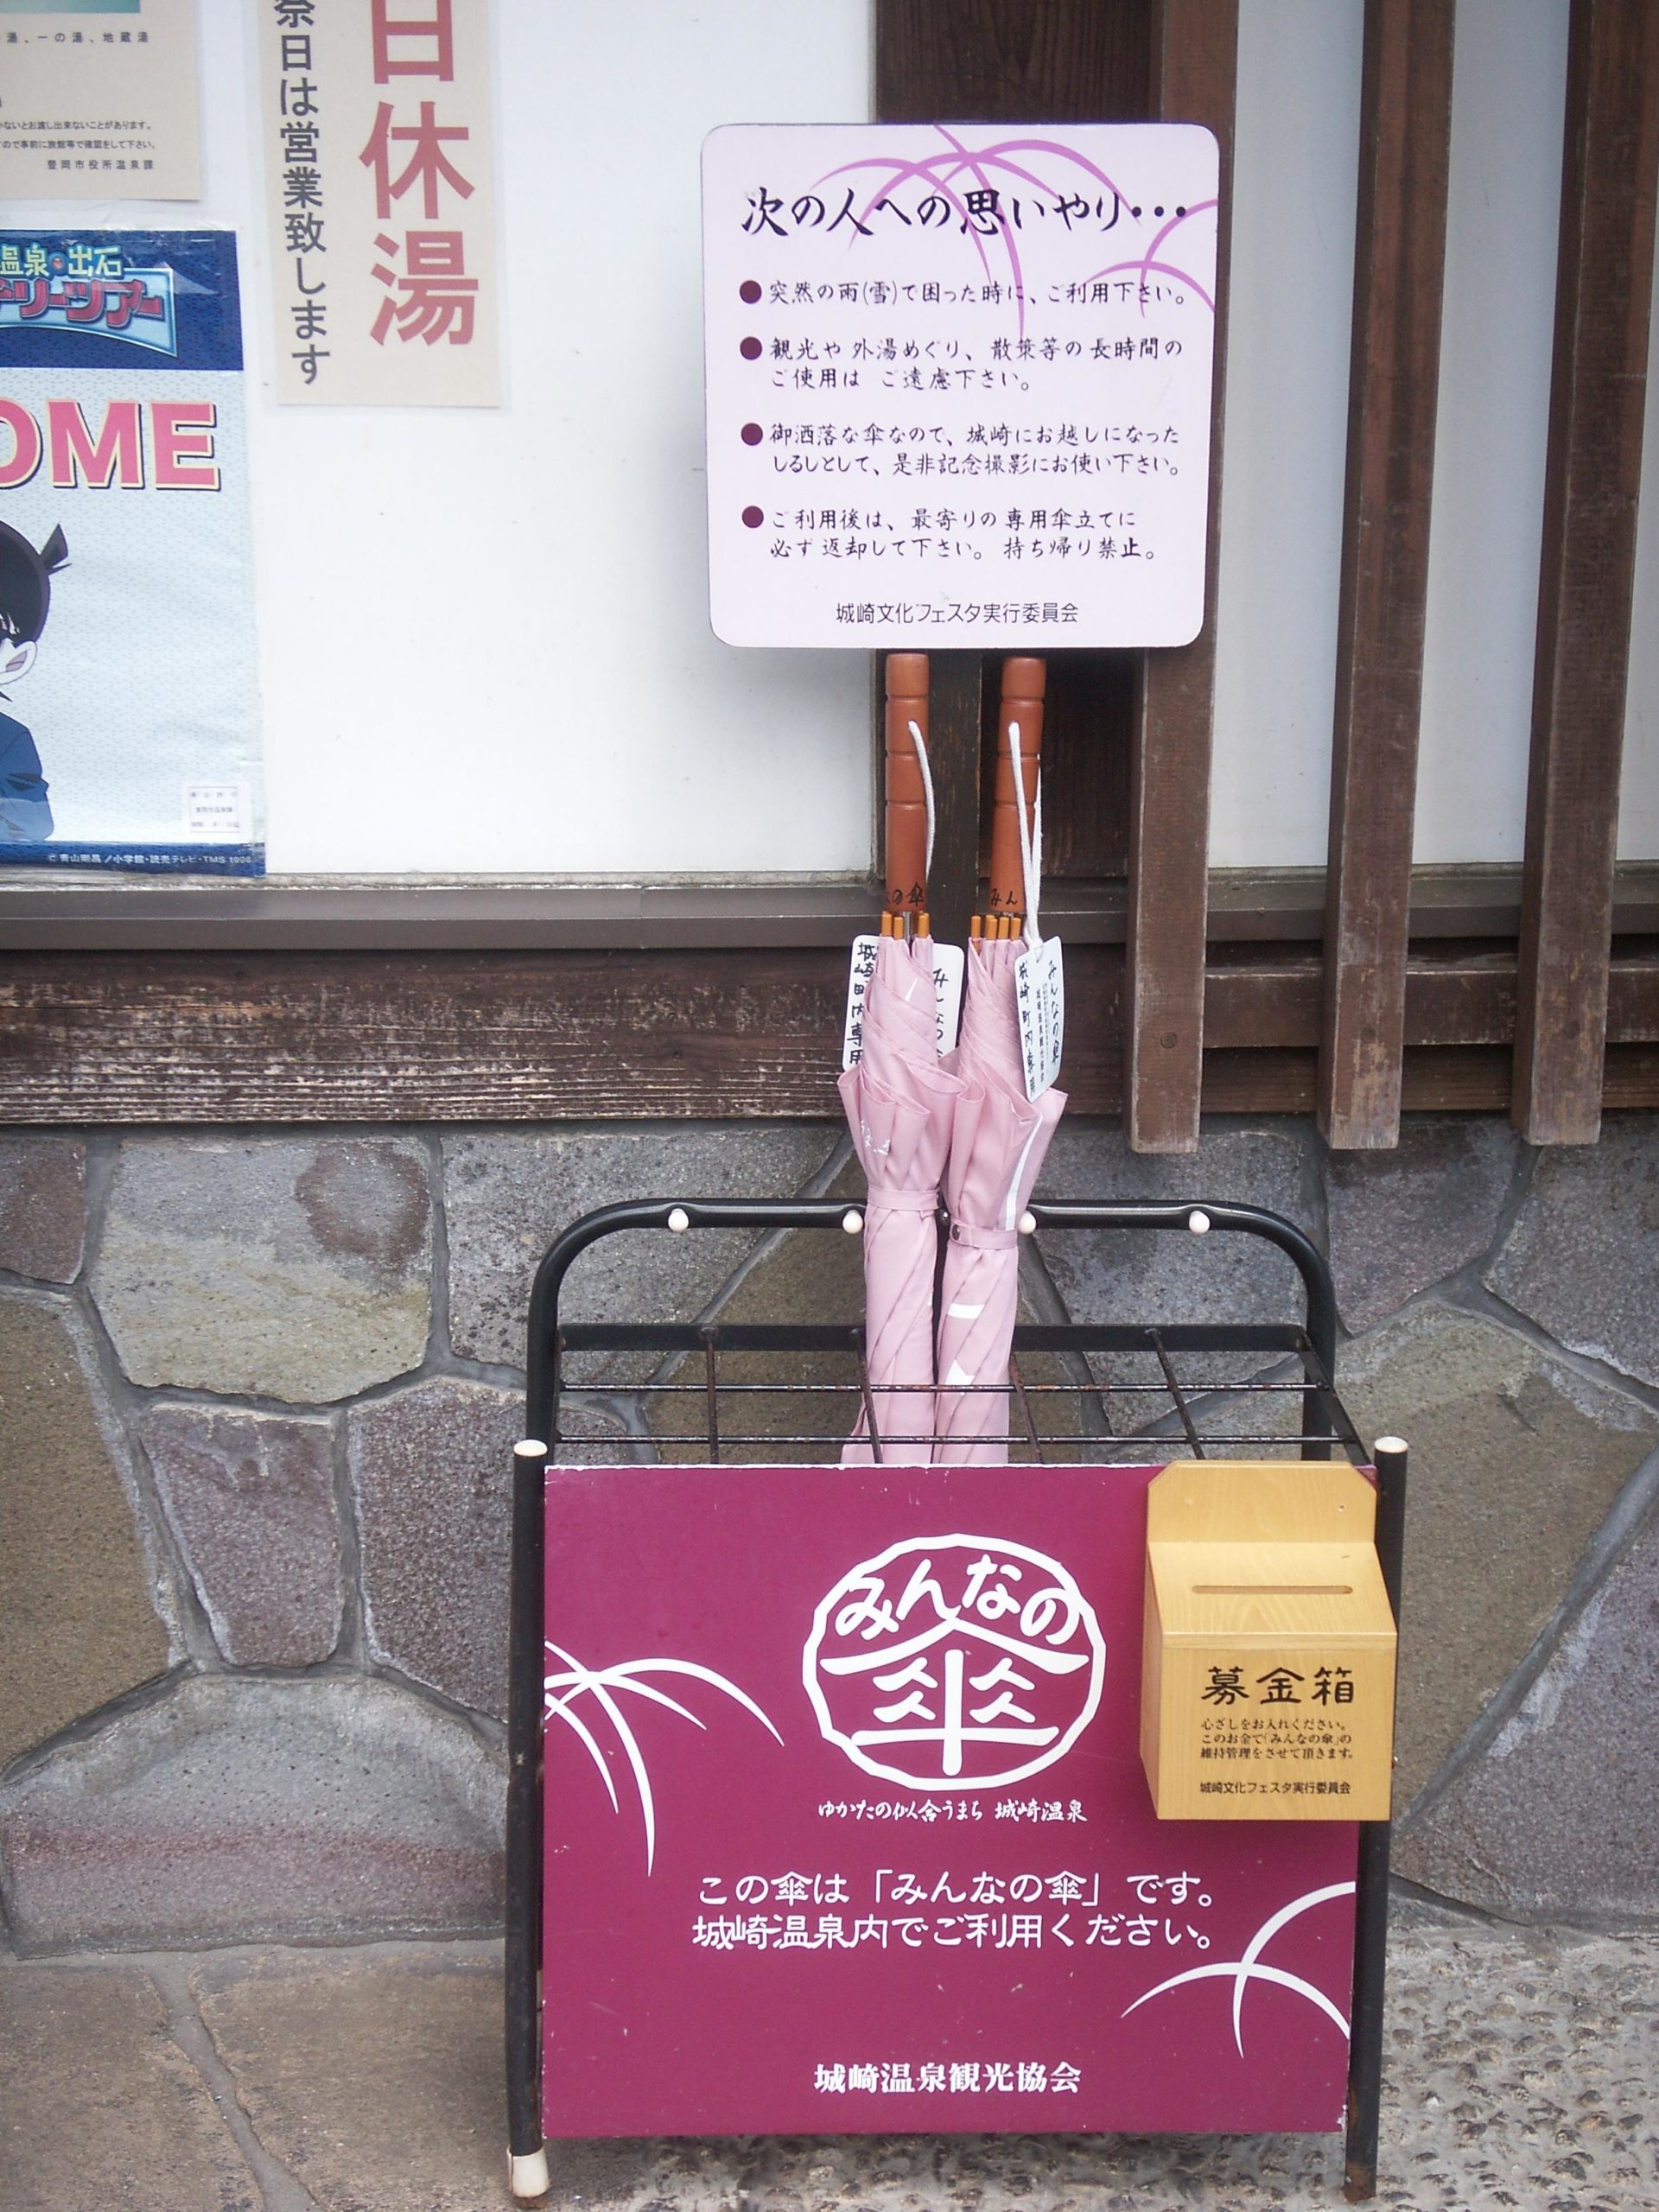 Japanese Vending Machines Now Lending Out Umbrellas